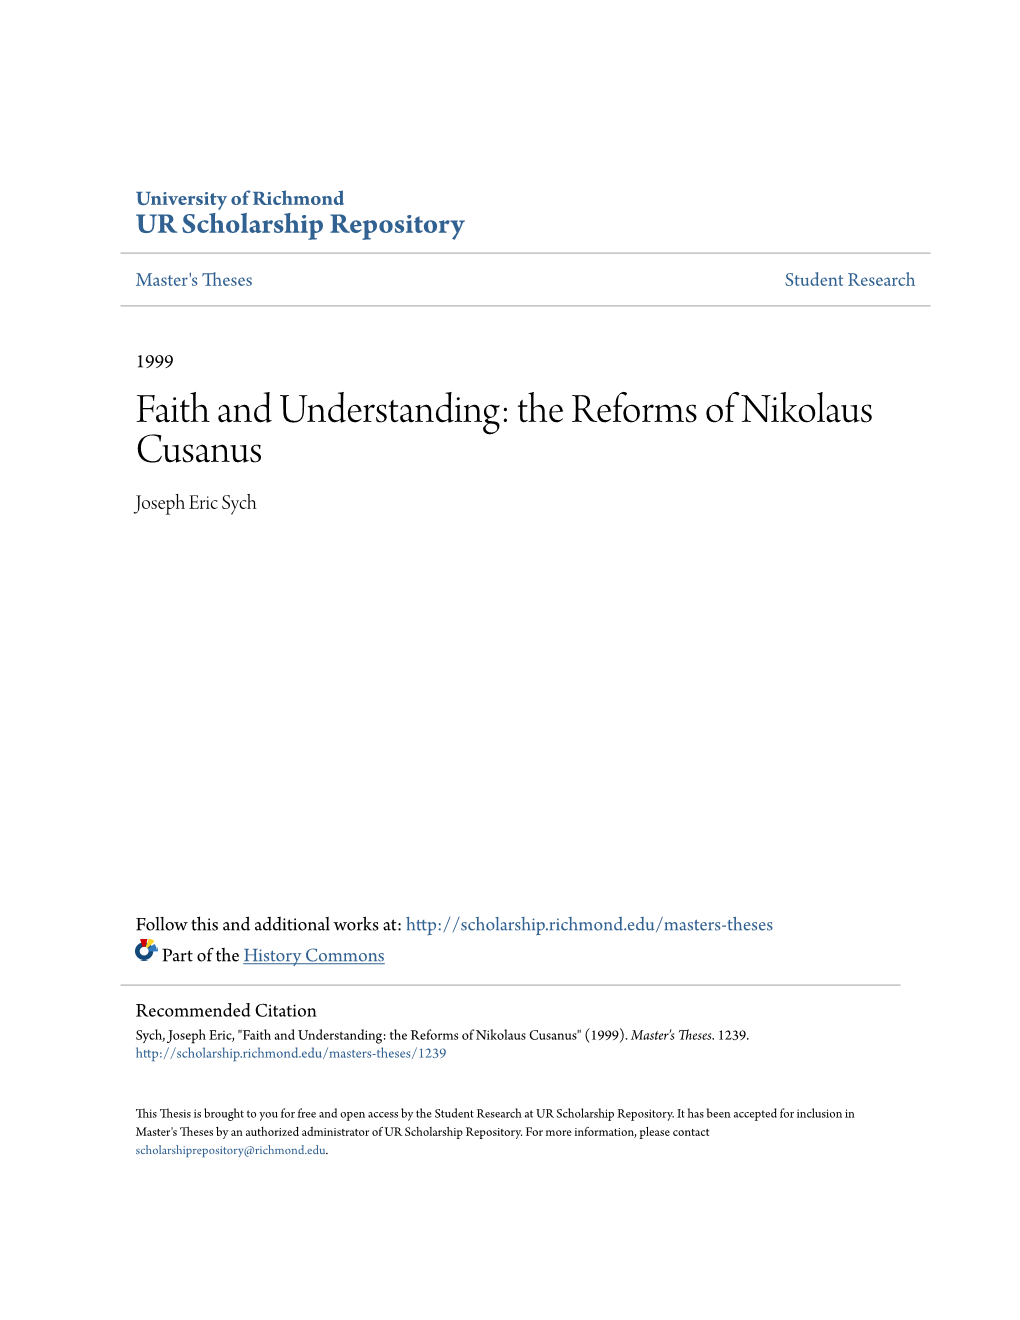 The Reforms of Nikolaus Cusanus Joseph Eric Sych